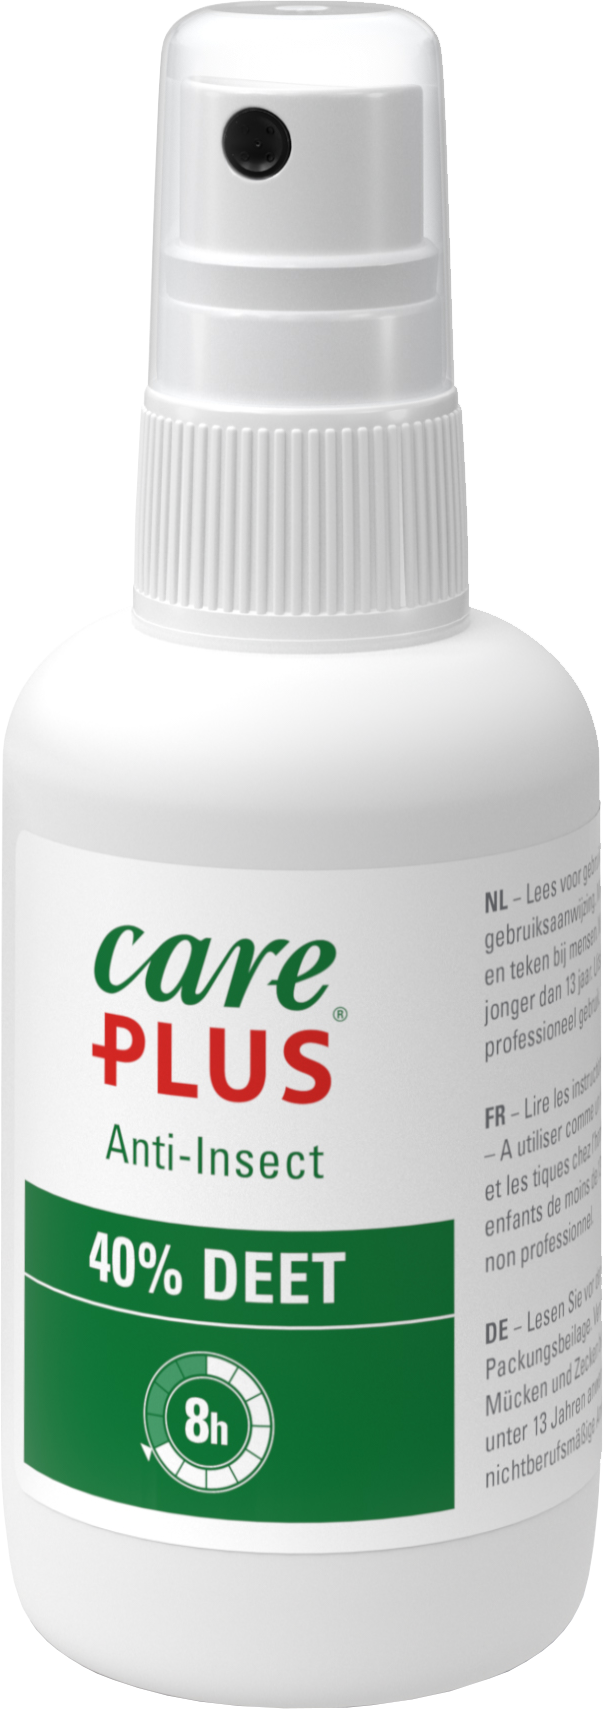 Care Plus Anti-Insect DEET 40% 60 ml Nocolour